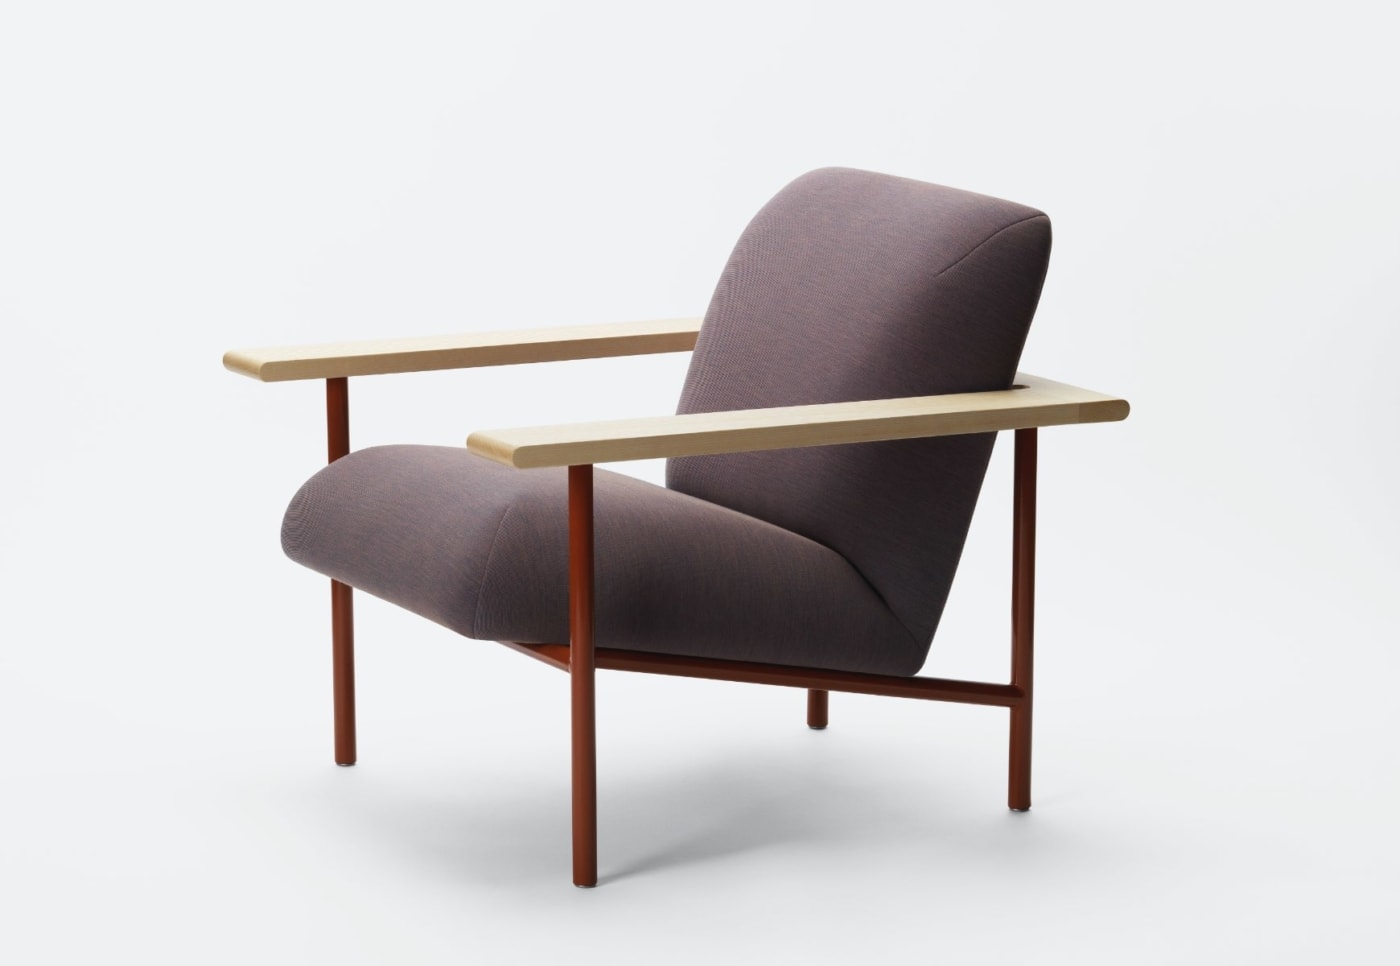 Furniture Design by London Studio Mentsen Top 1